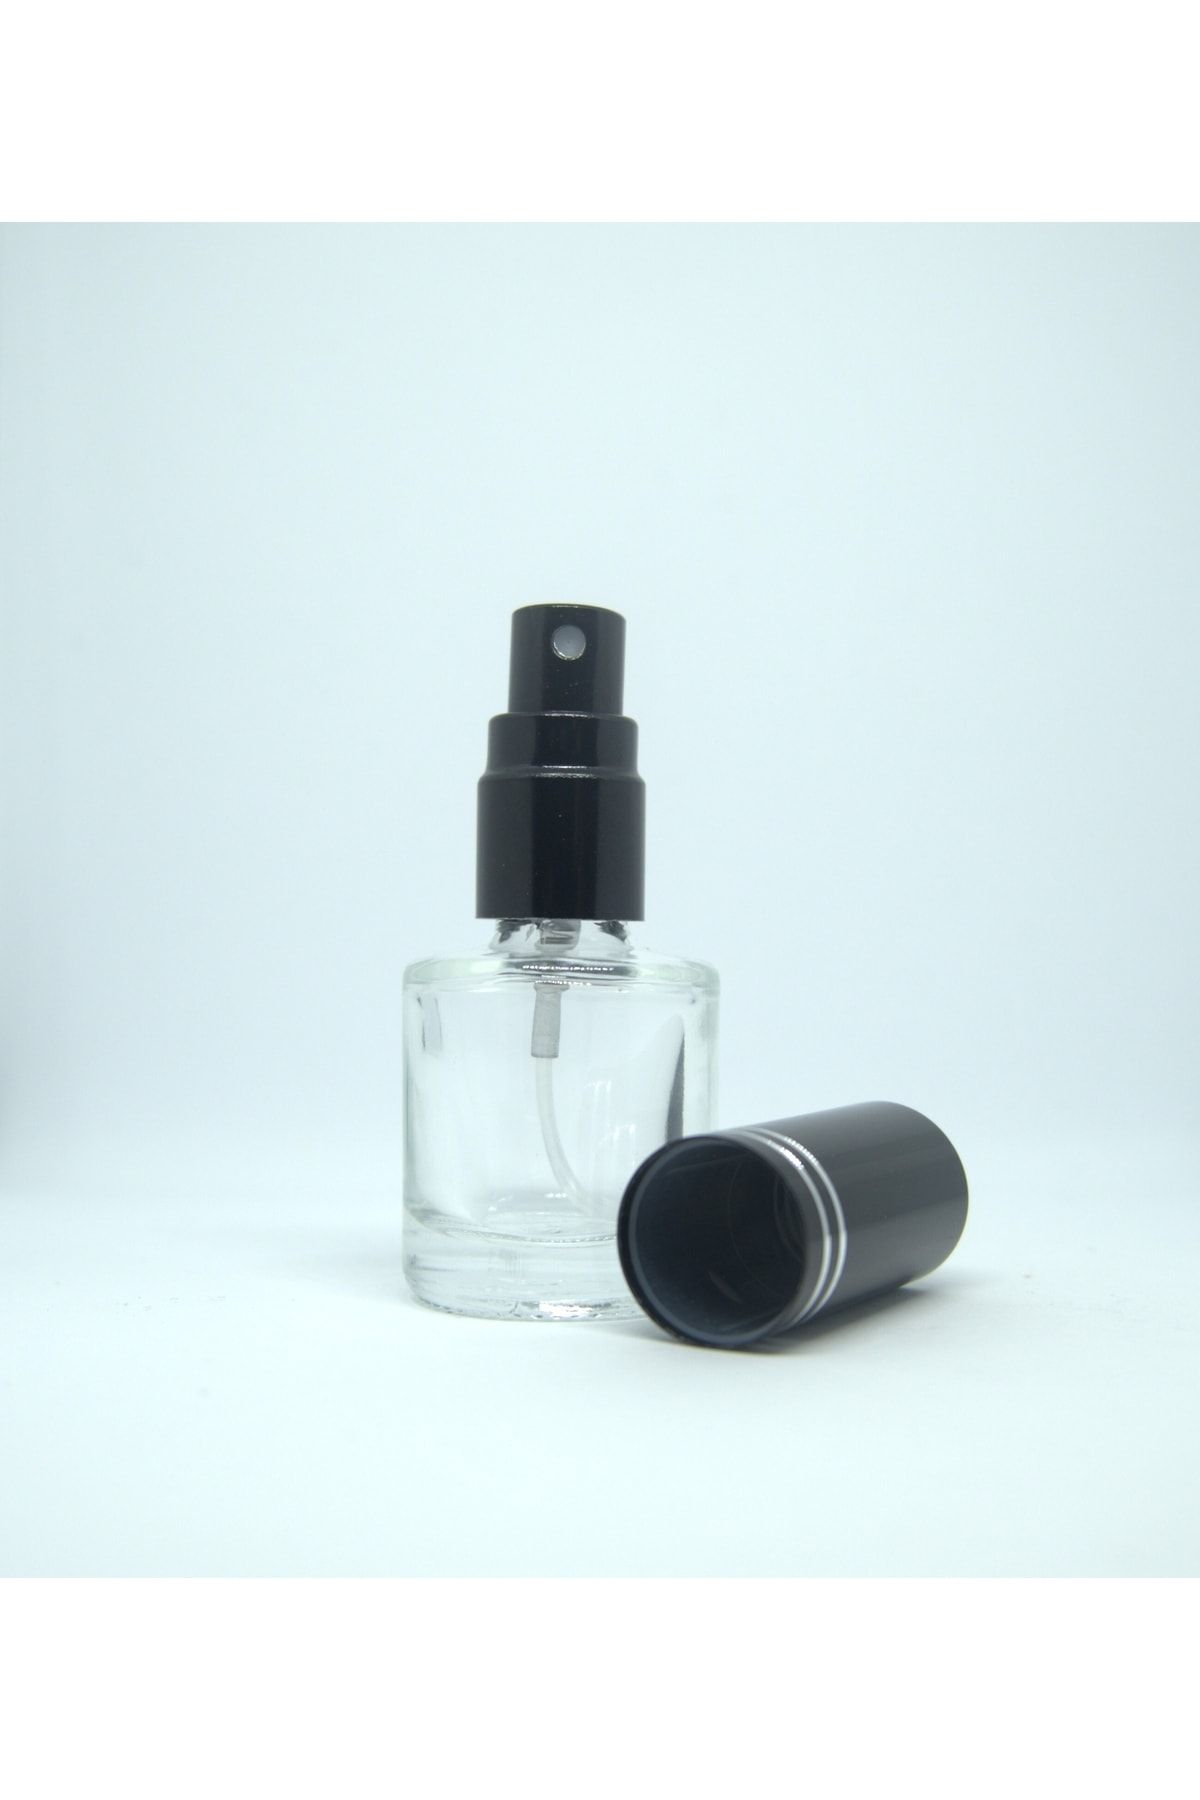 D&B YOL Parfüm Şişesi 8 ml (5 ADET) Boş Siyah Metal Valf